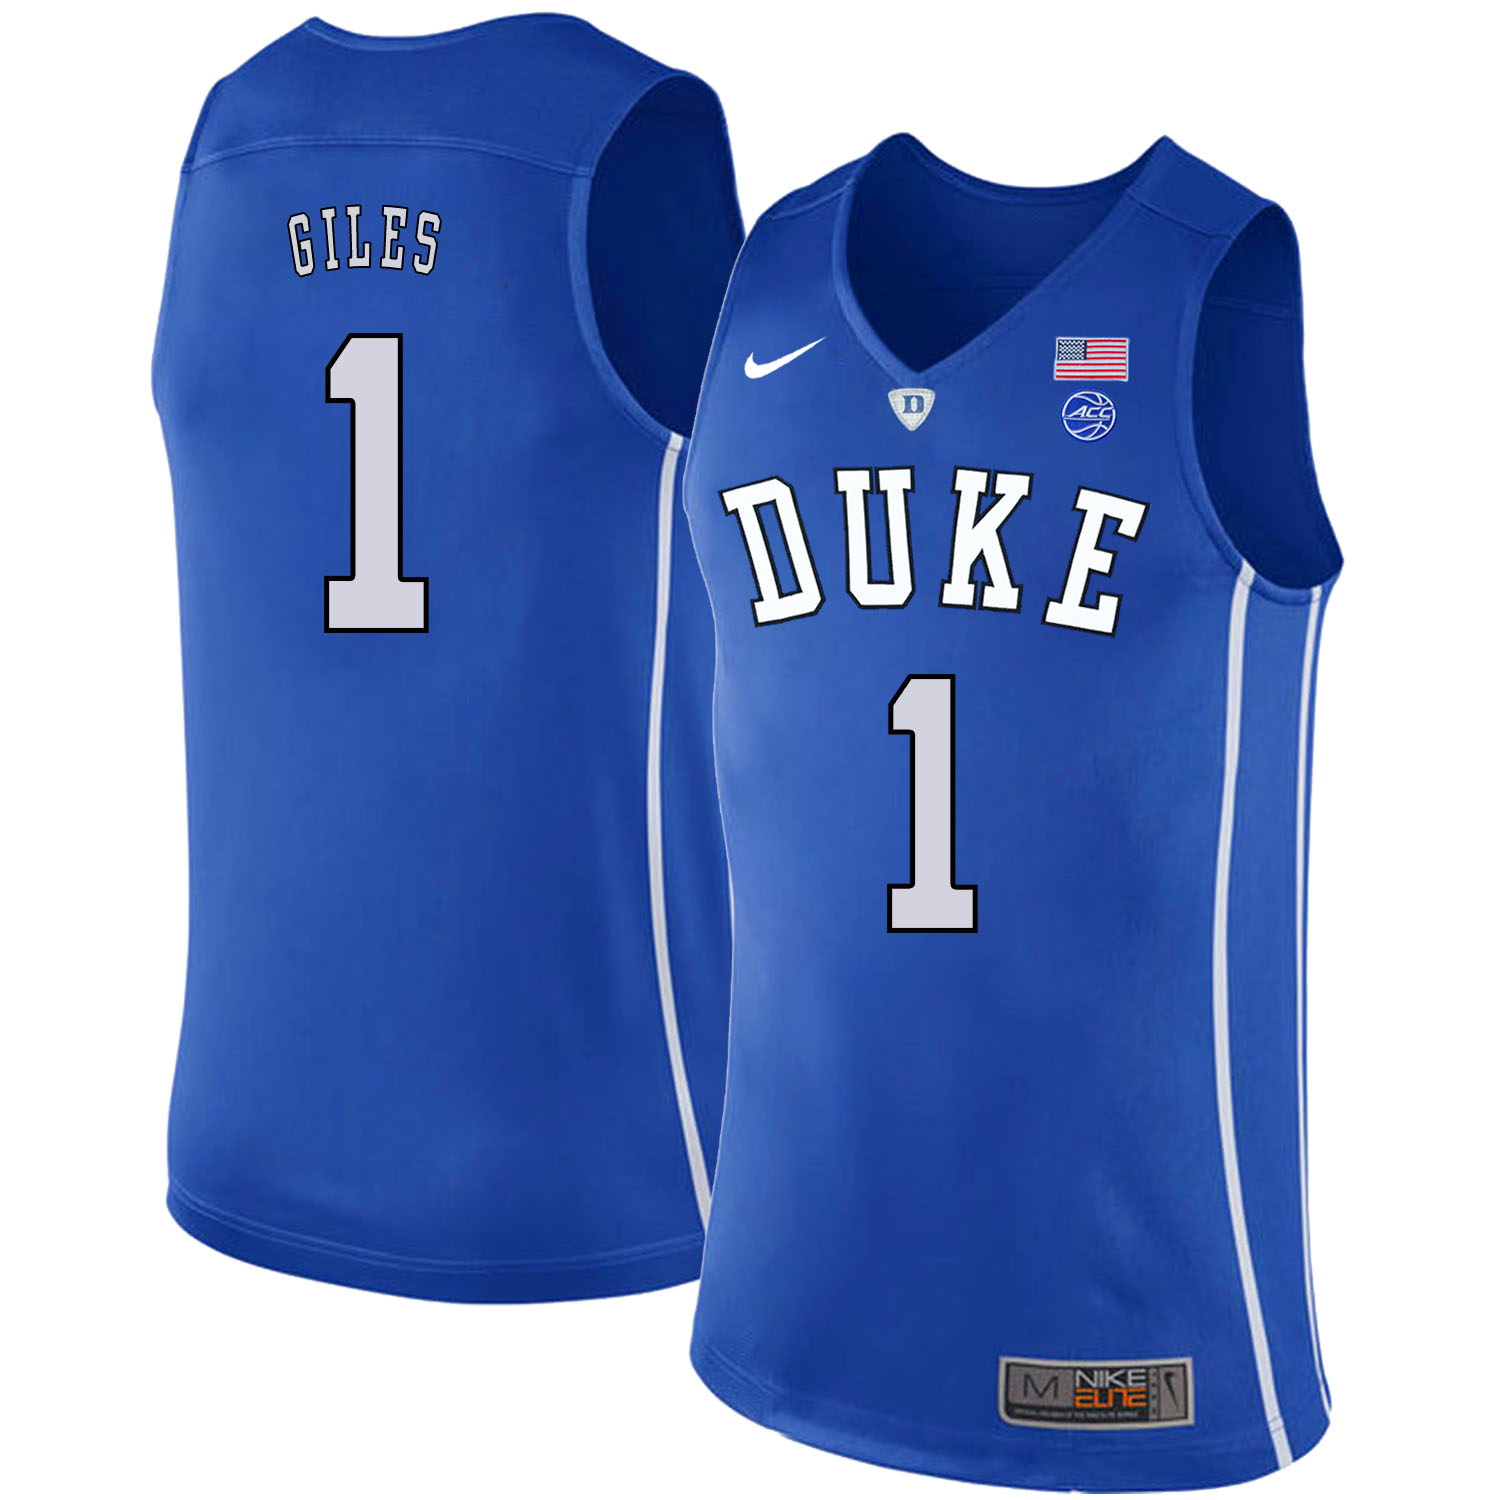 Duke Blue Devils 1 Harry Giles Blue Nike College Basketball Jersey